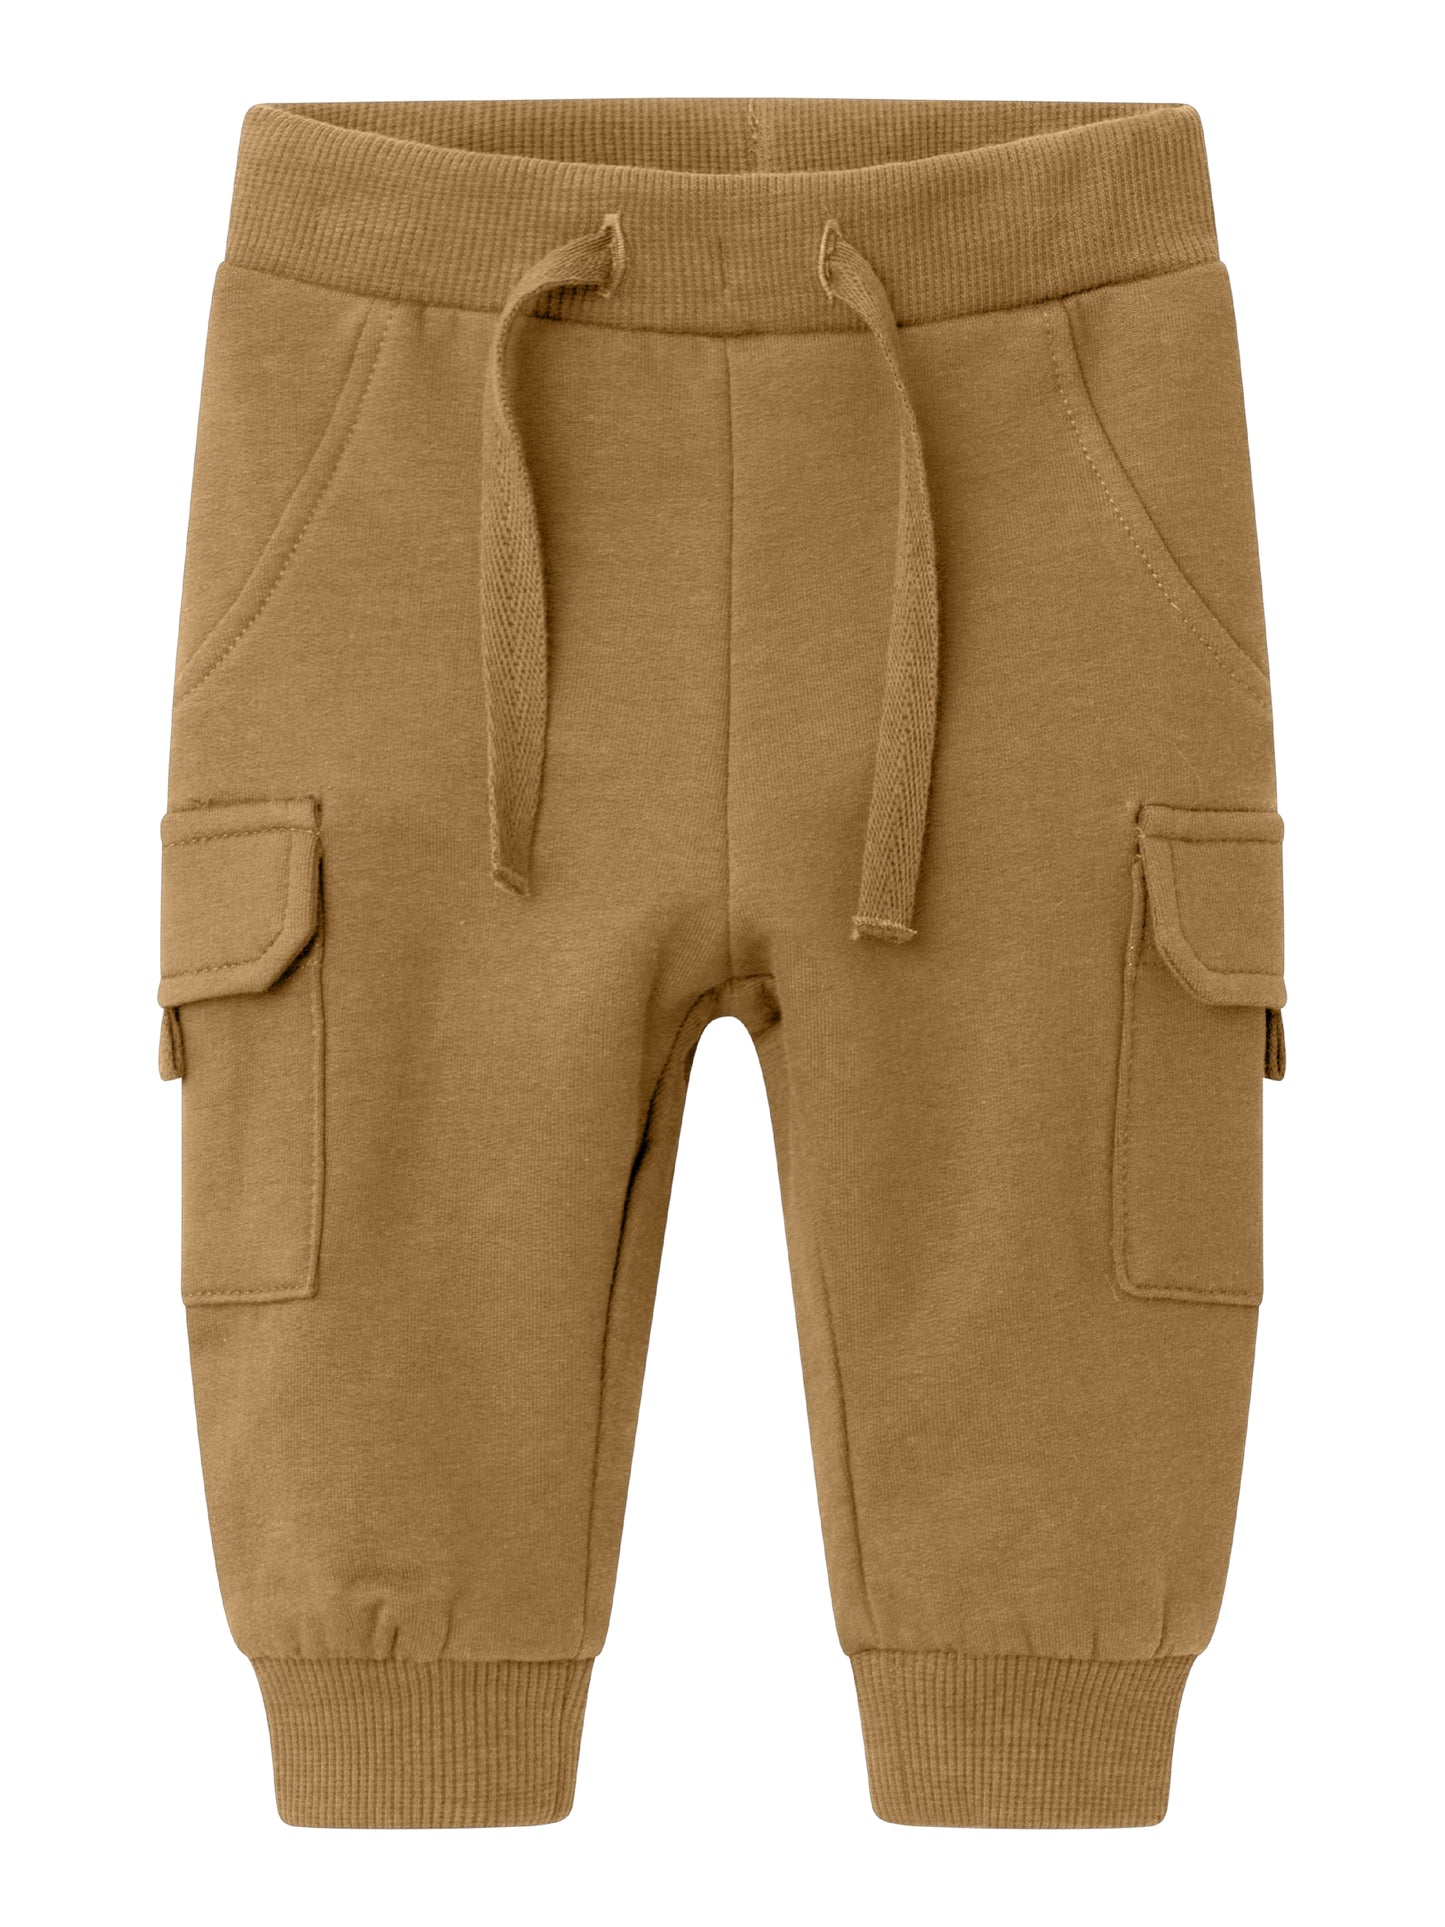 Name it - cargo pants - Bone brown